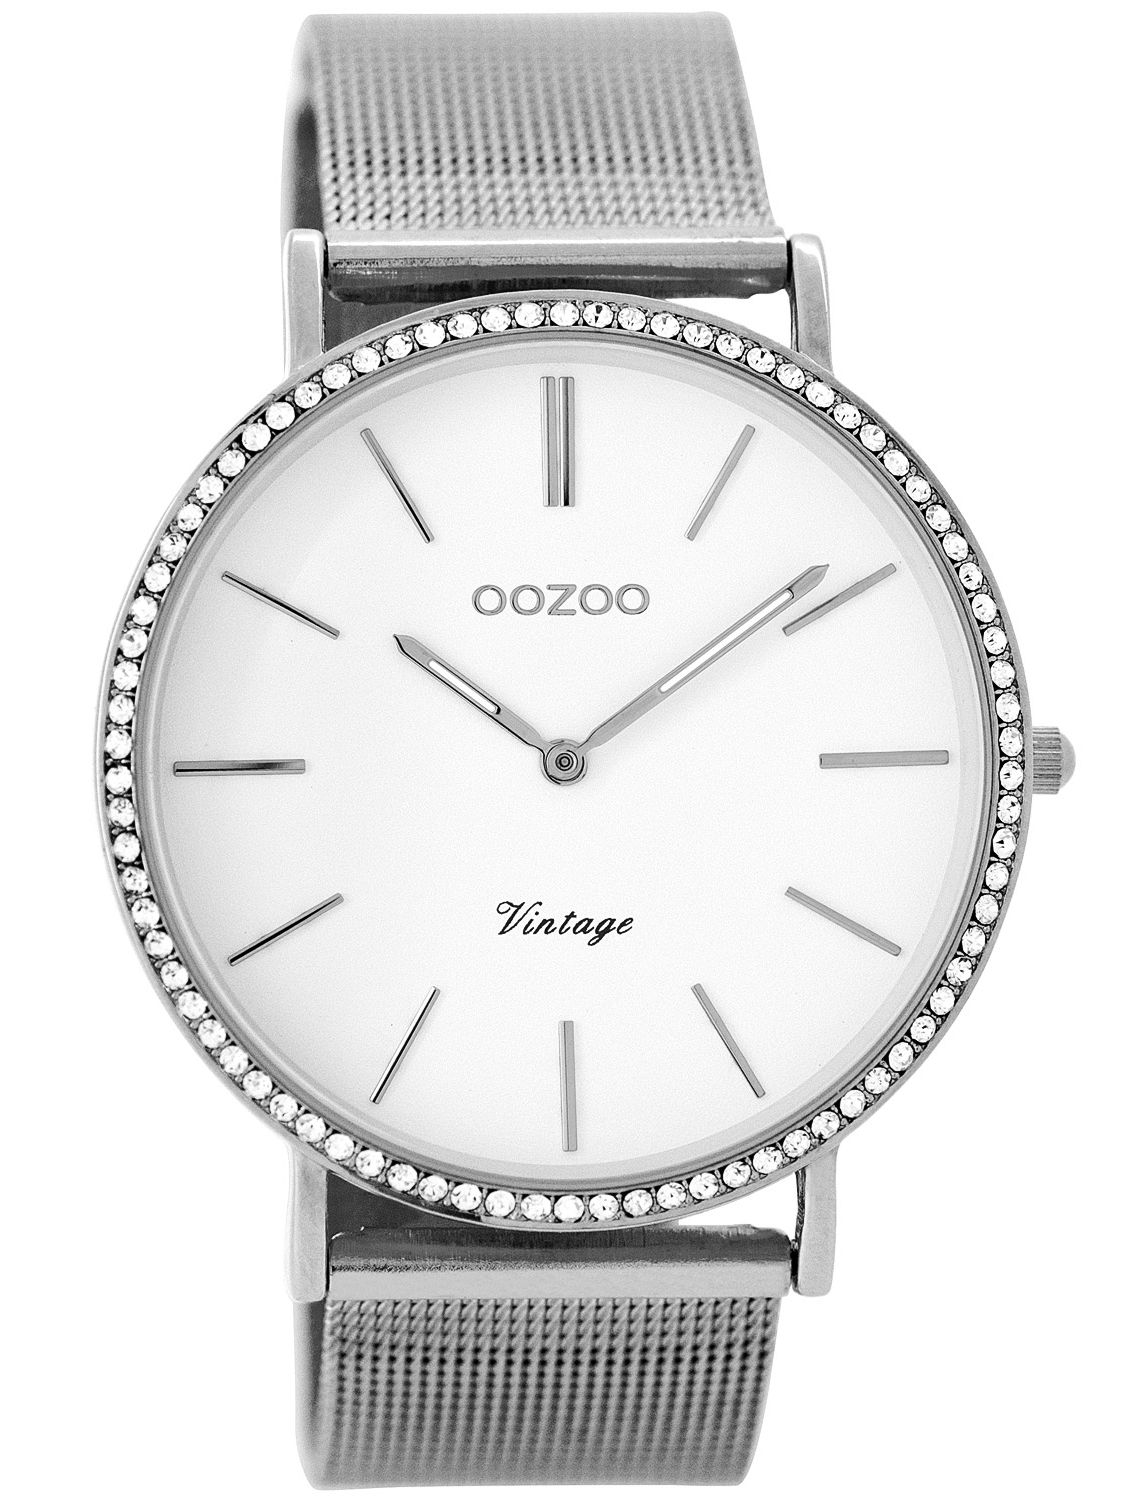 Oozoo C80 Damen Armbanduhr Vintage Silber Weiss 40 Mm